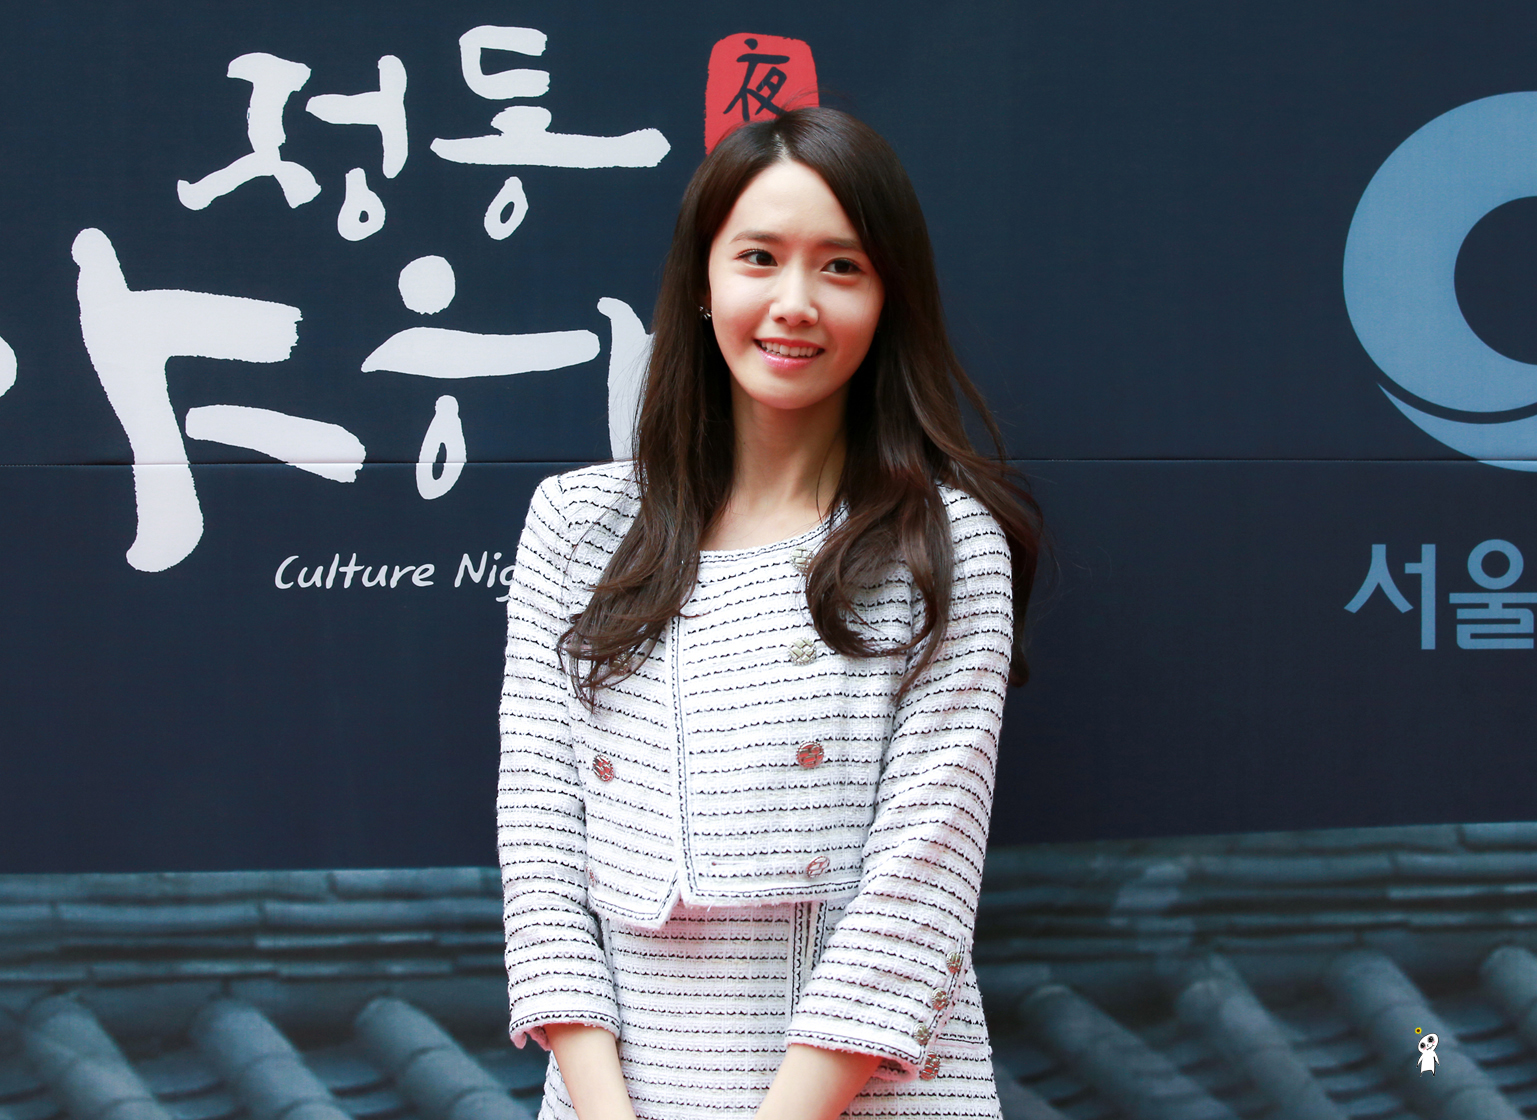 [PIC][29-05-2015]YoonA tham dự "Jung-gu Culture Night Festival" tại Deoksugung vào chiều nay - Page 3 26169A4A556AE29D0F9187